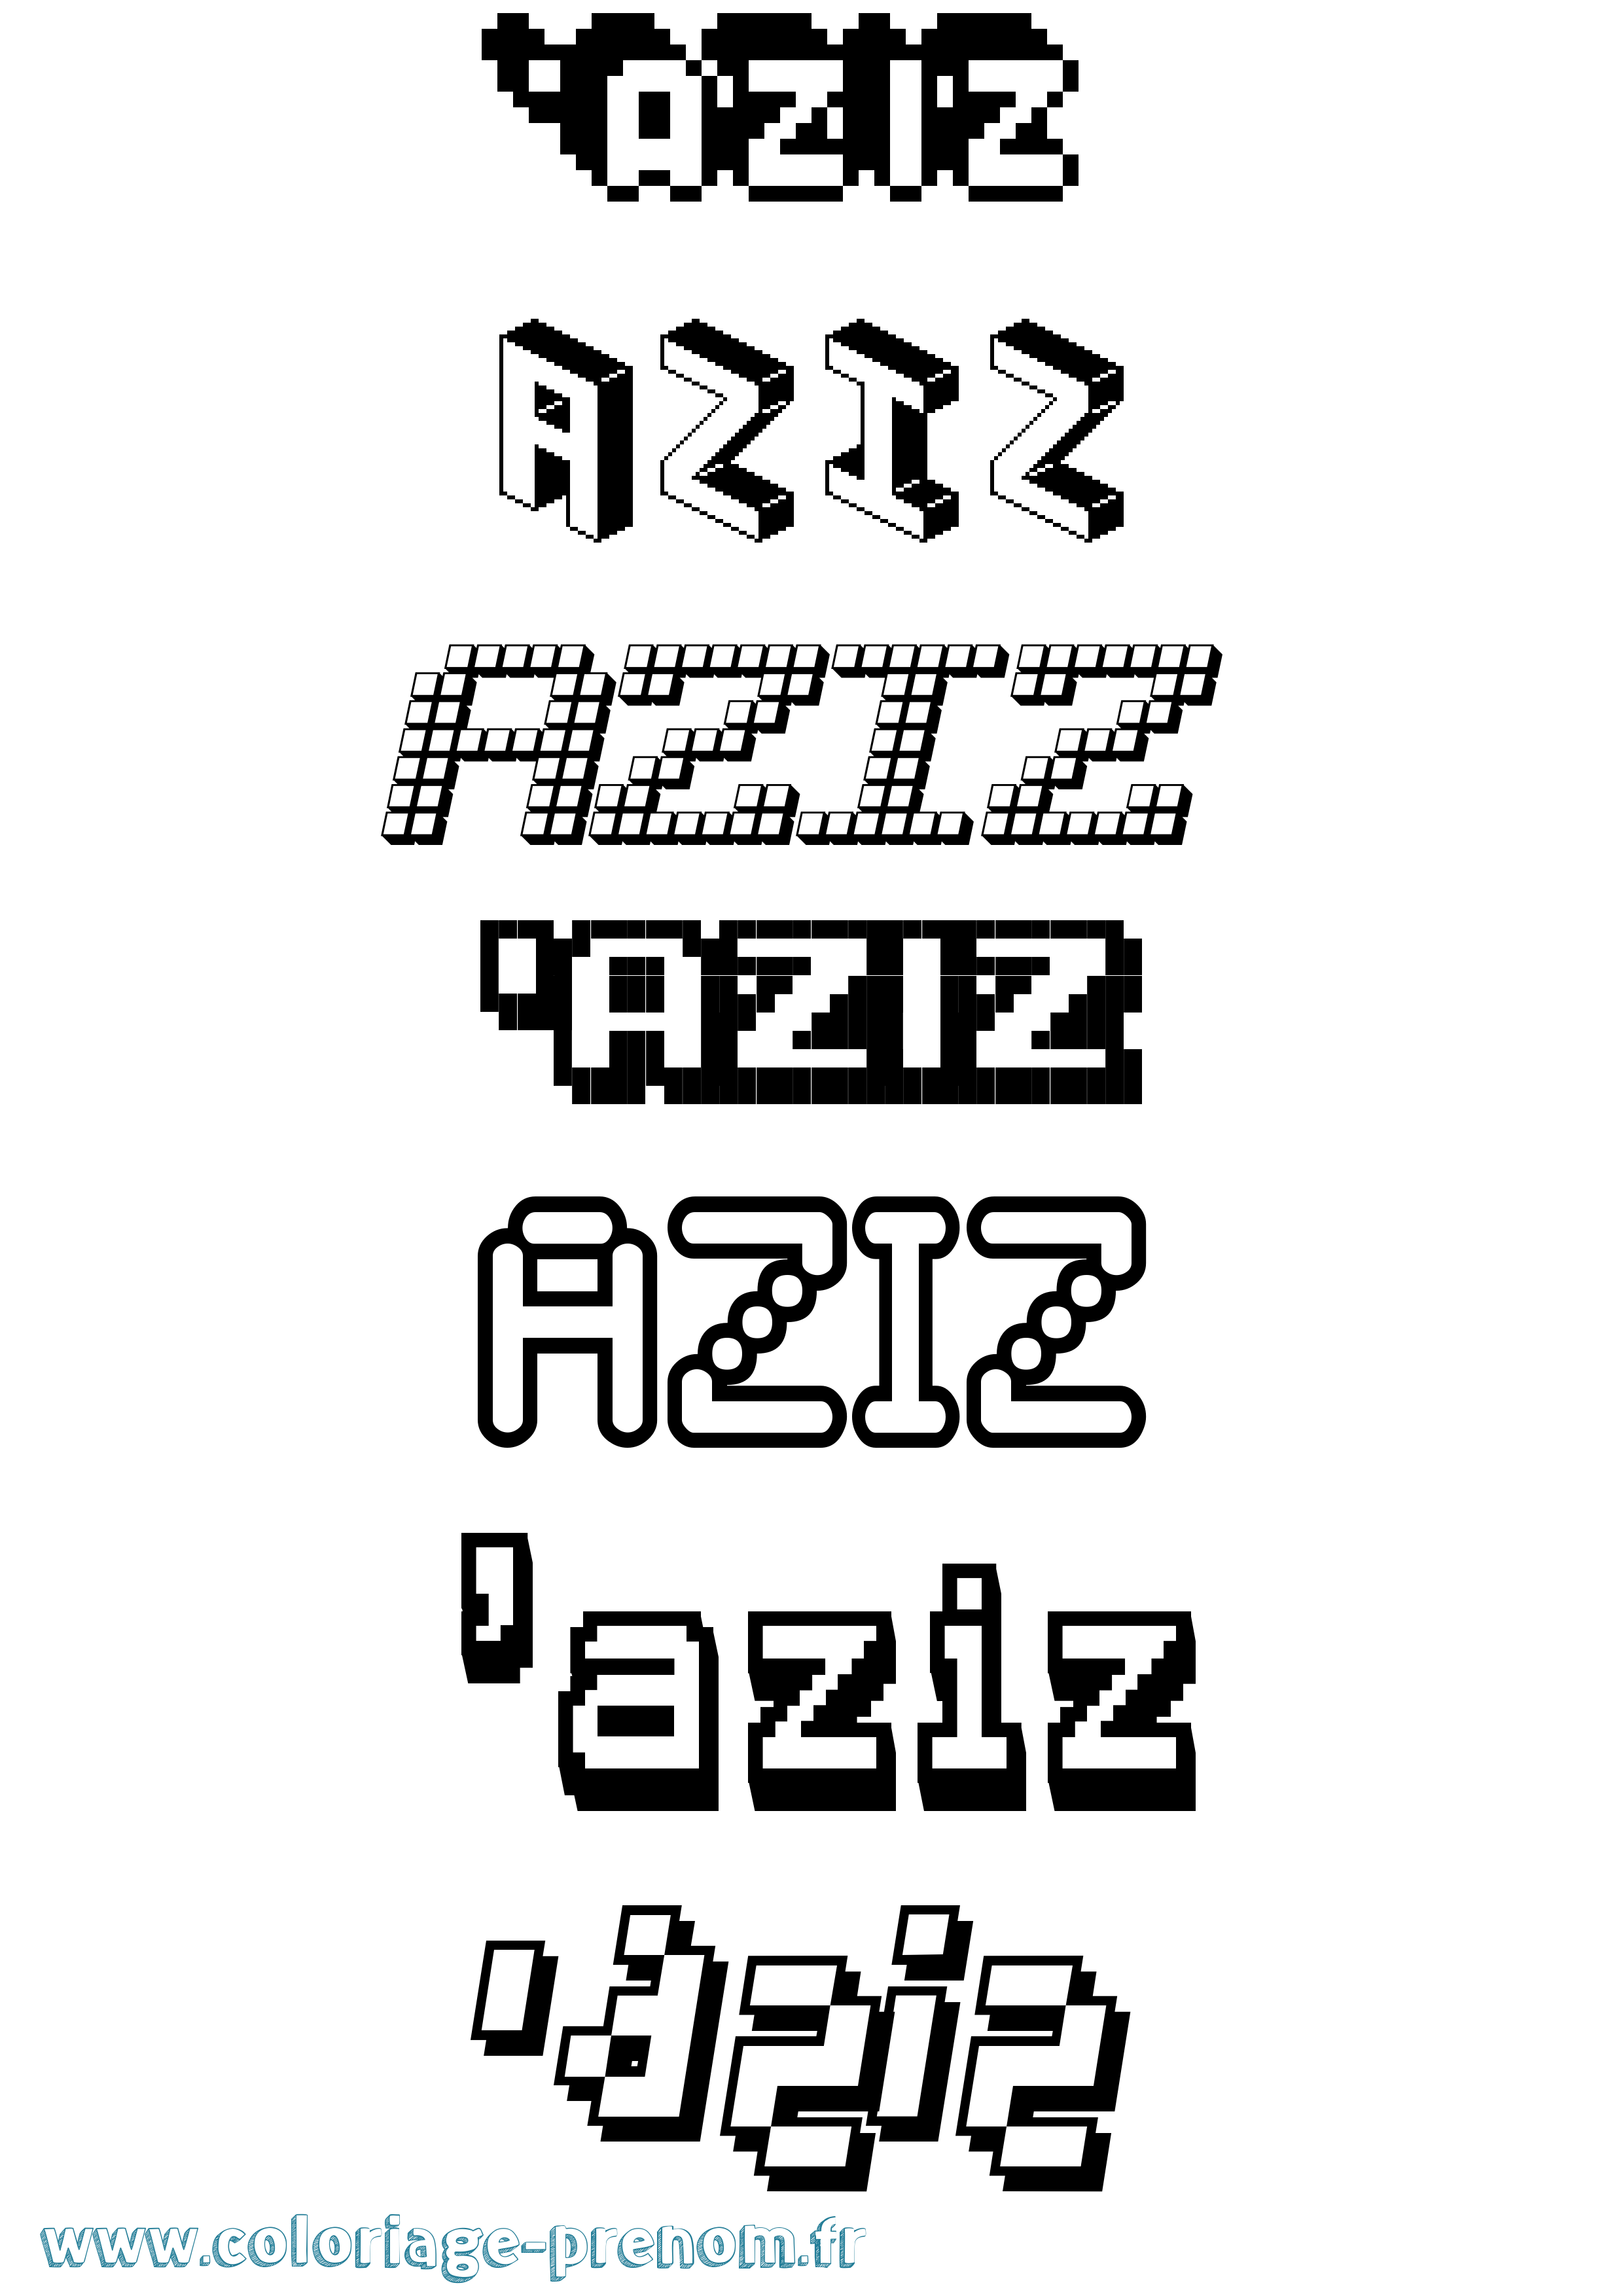 Coloriage prénom 'Aziz Pixel